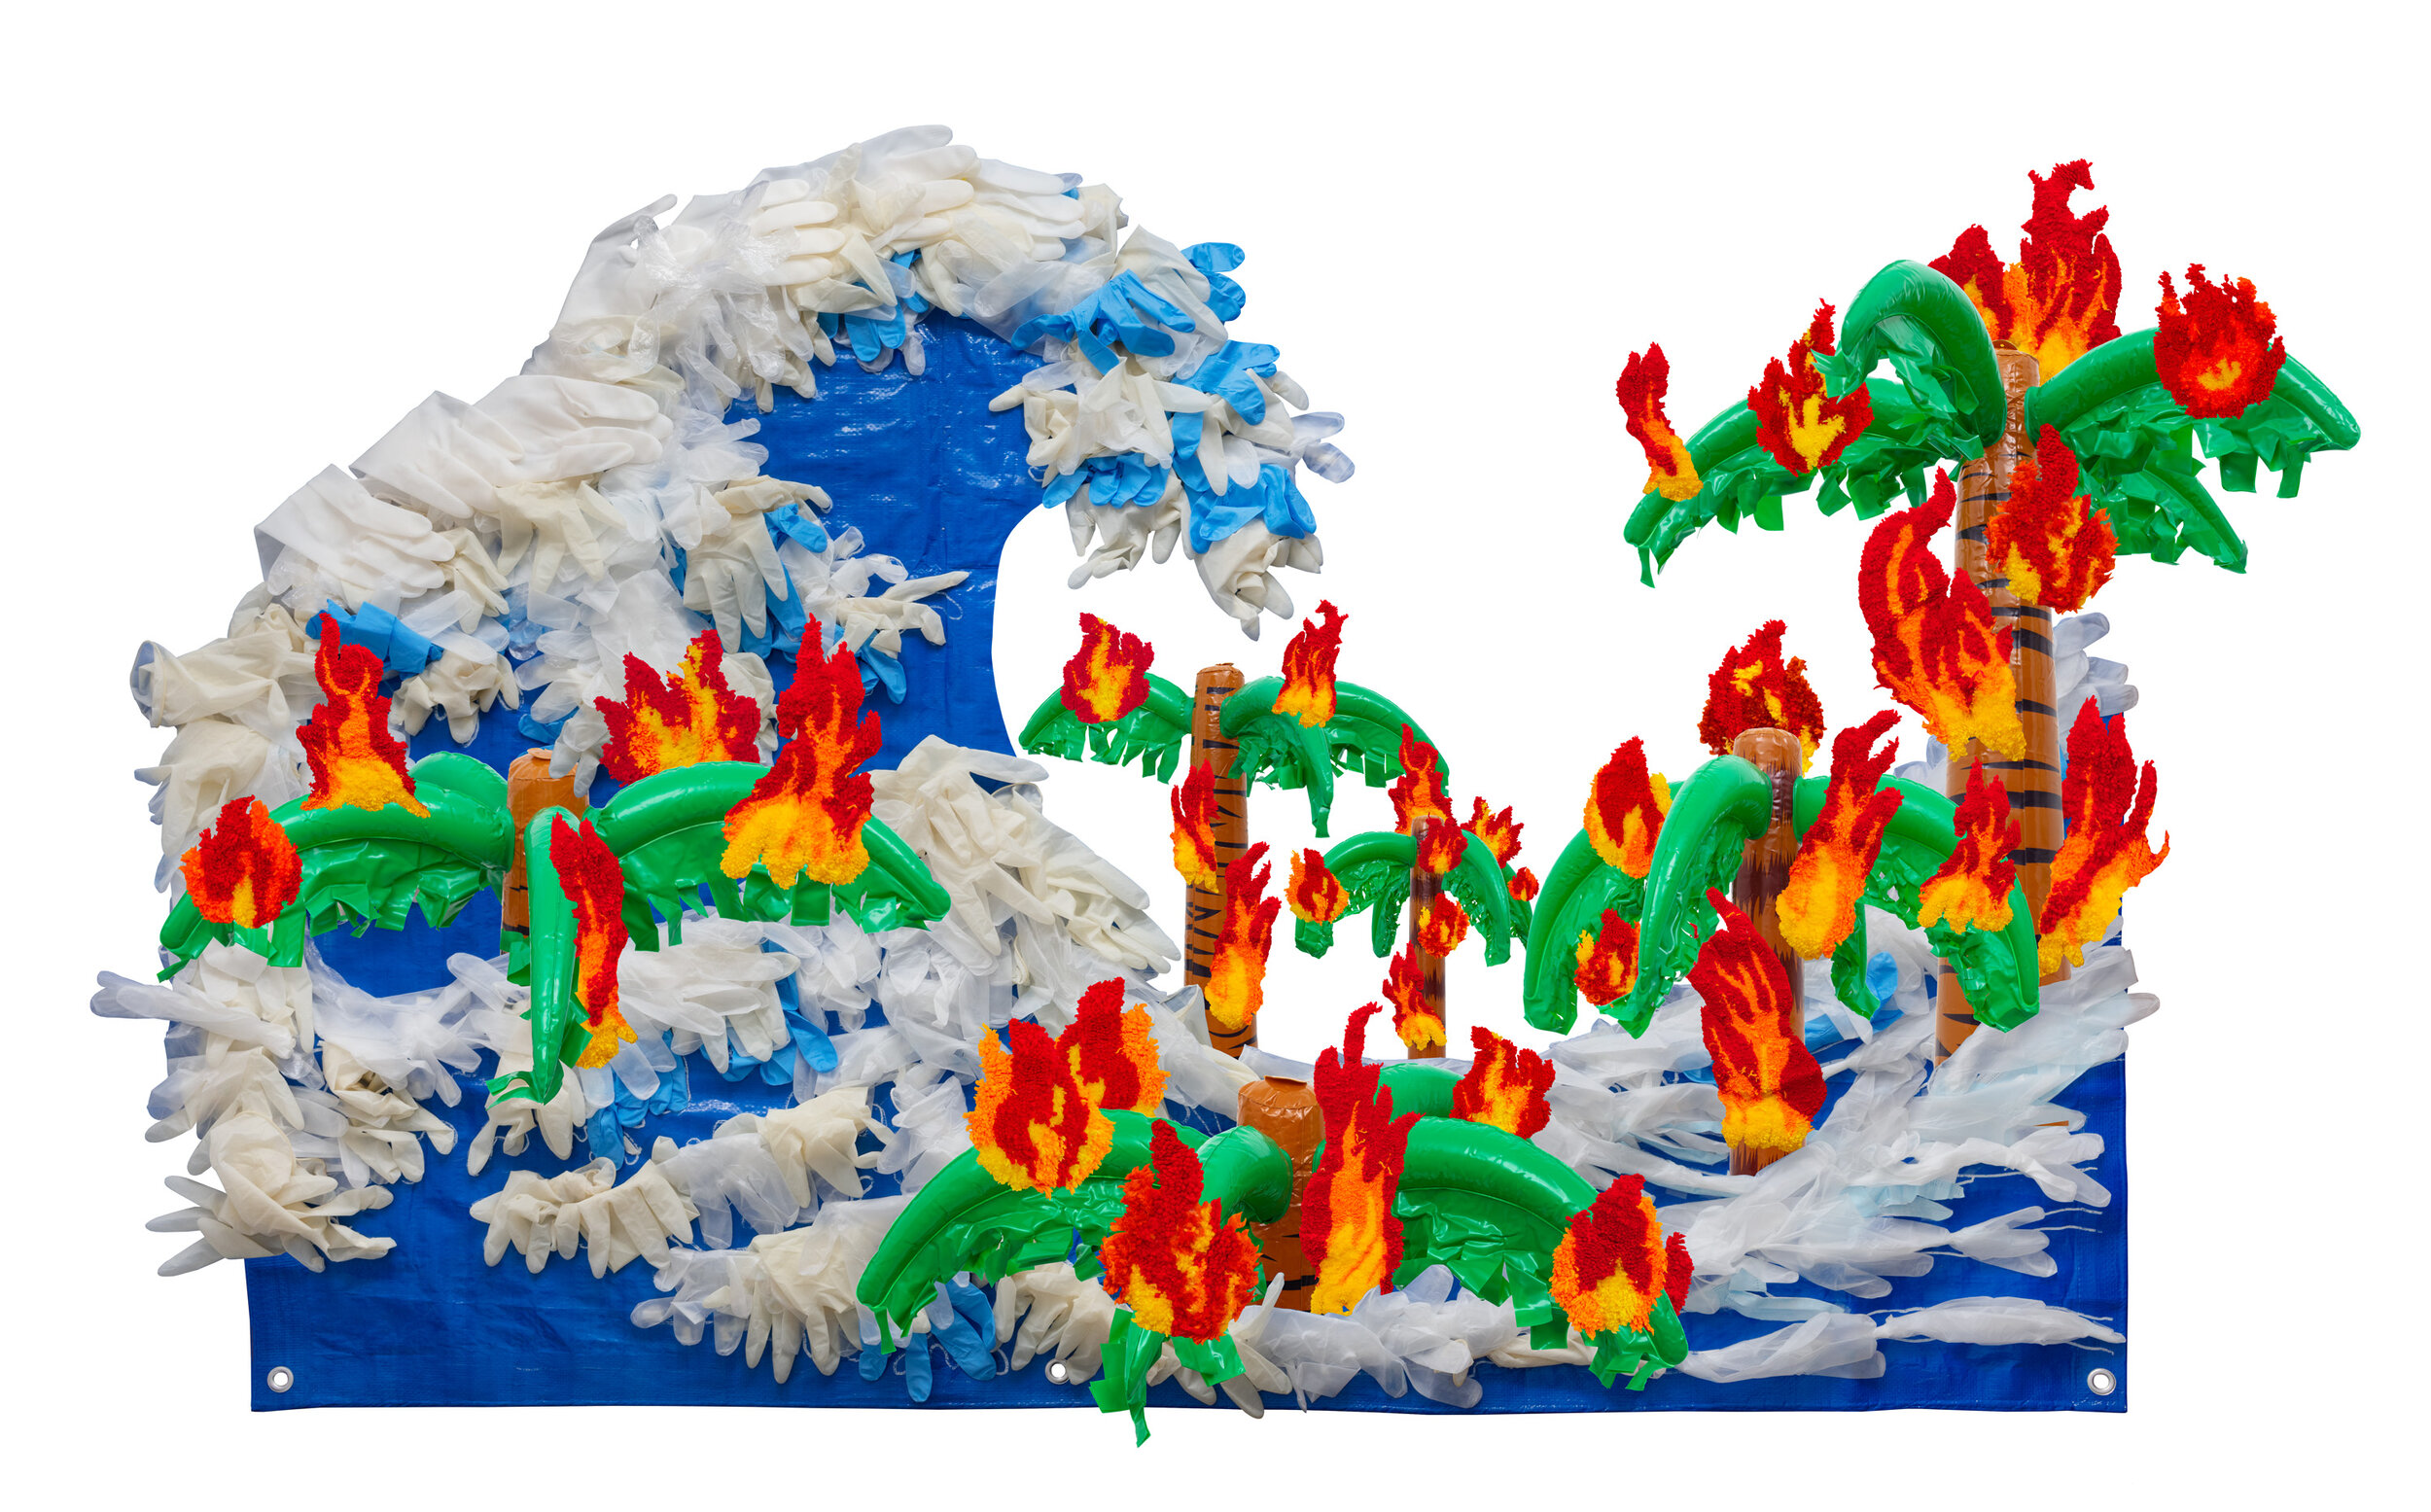 "Plastic Disasters", vinyl, latex, acrylic yarn, surgical masks on plastic tarp, 72 x 48, 2020